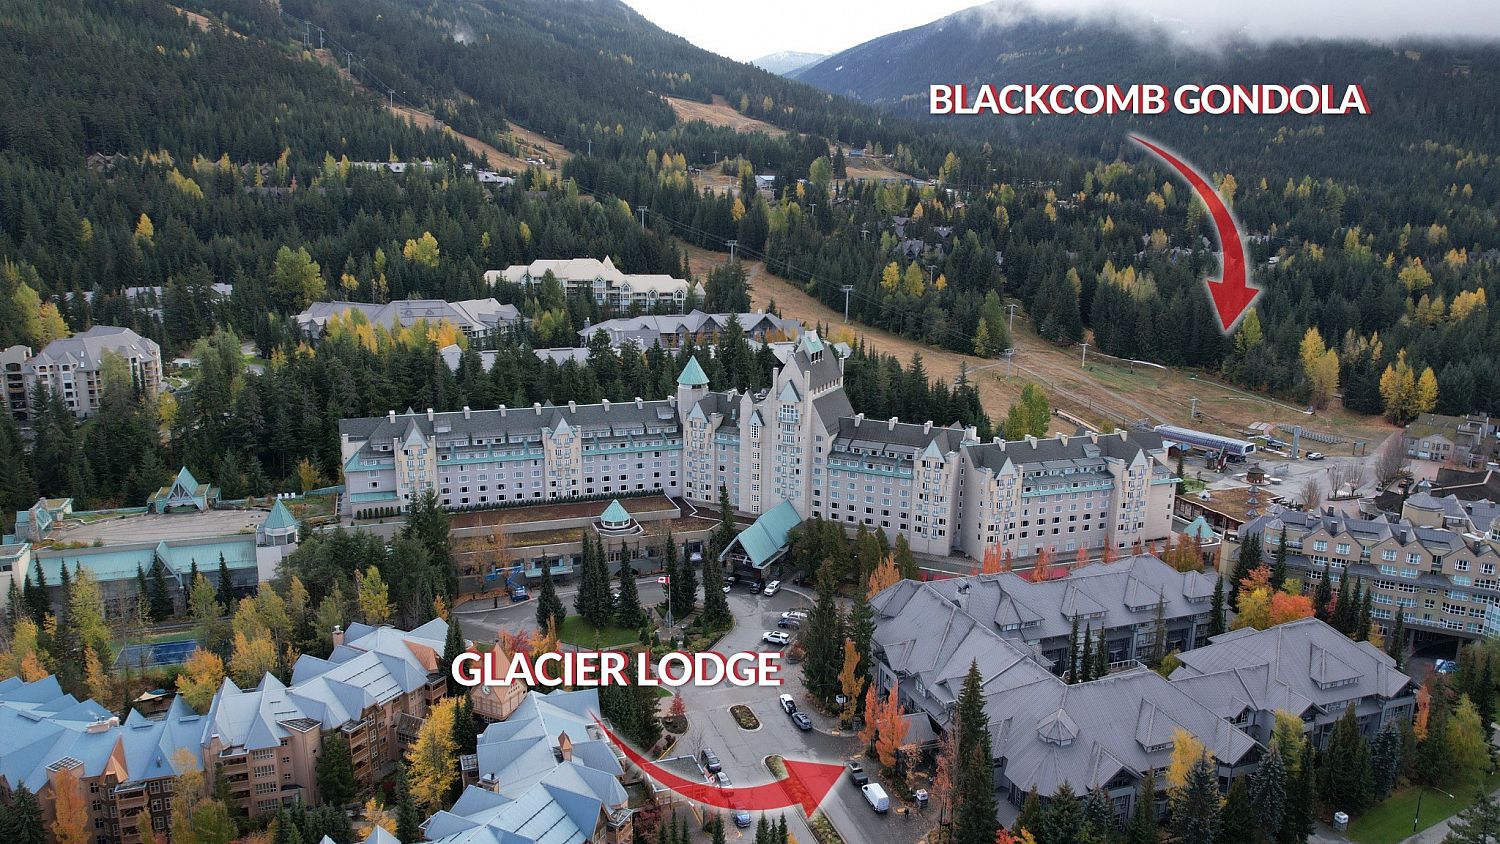 228 Glacier Lodge